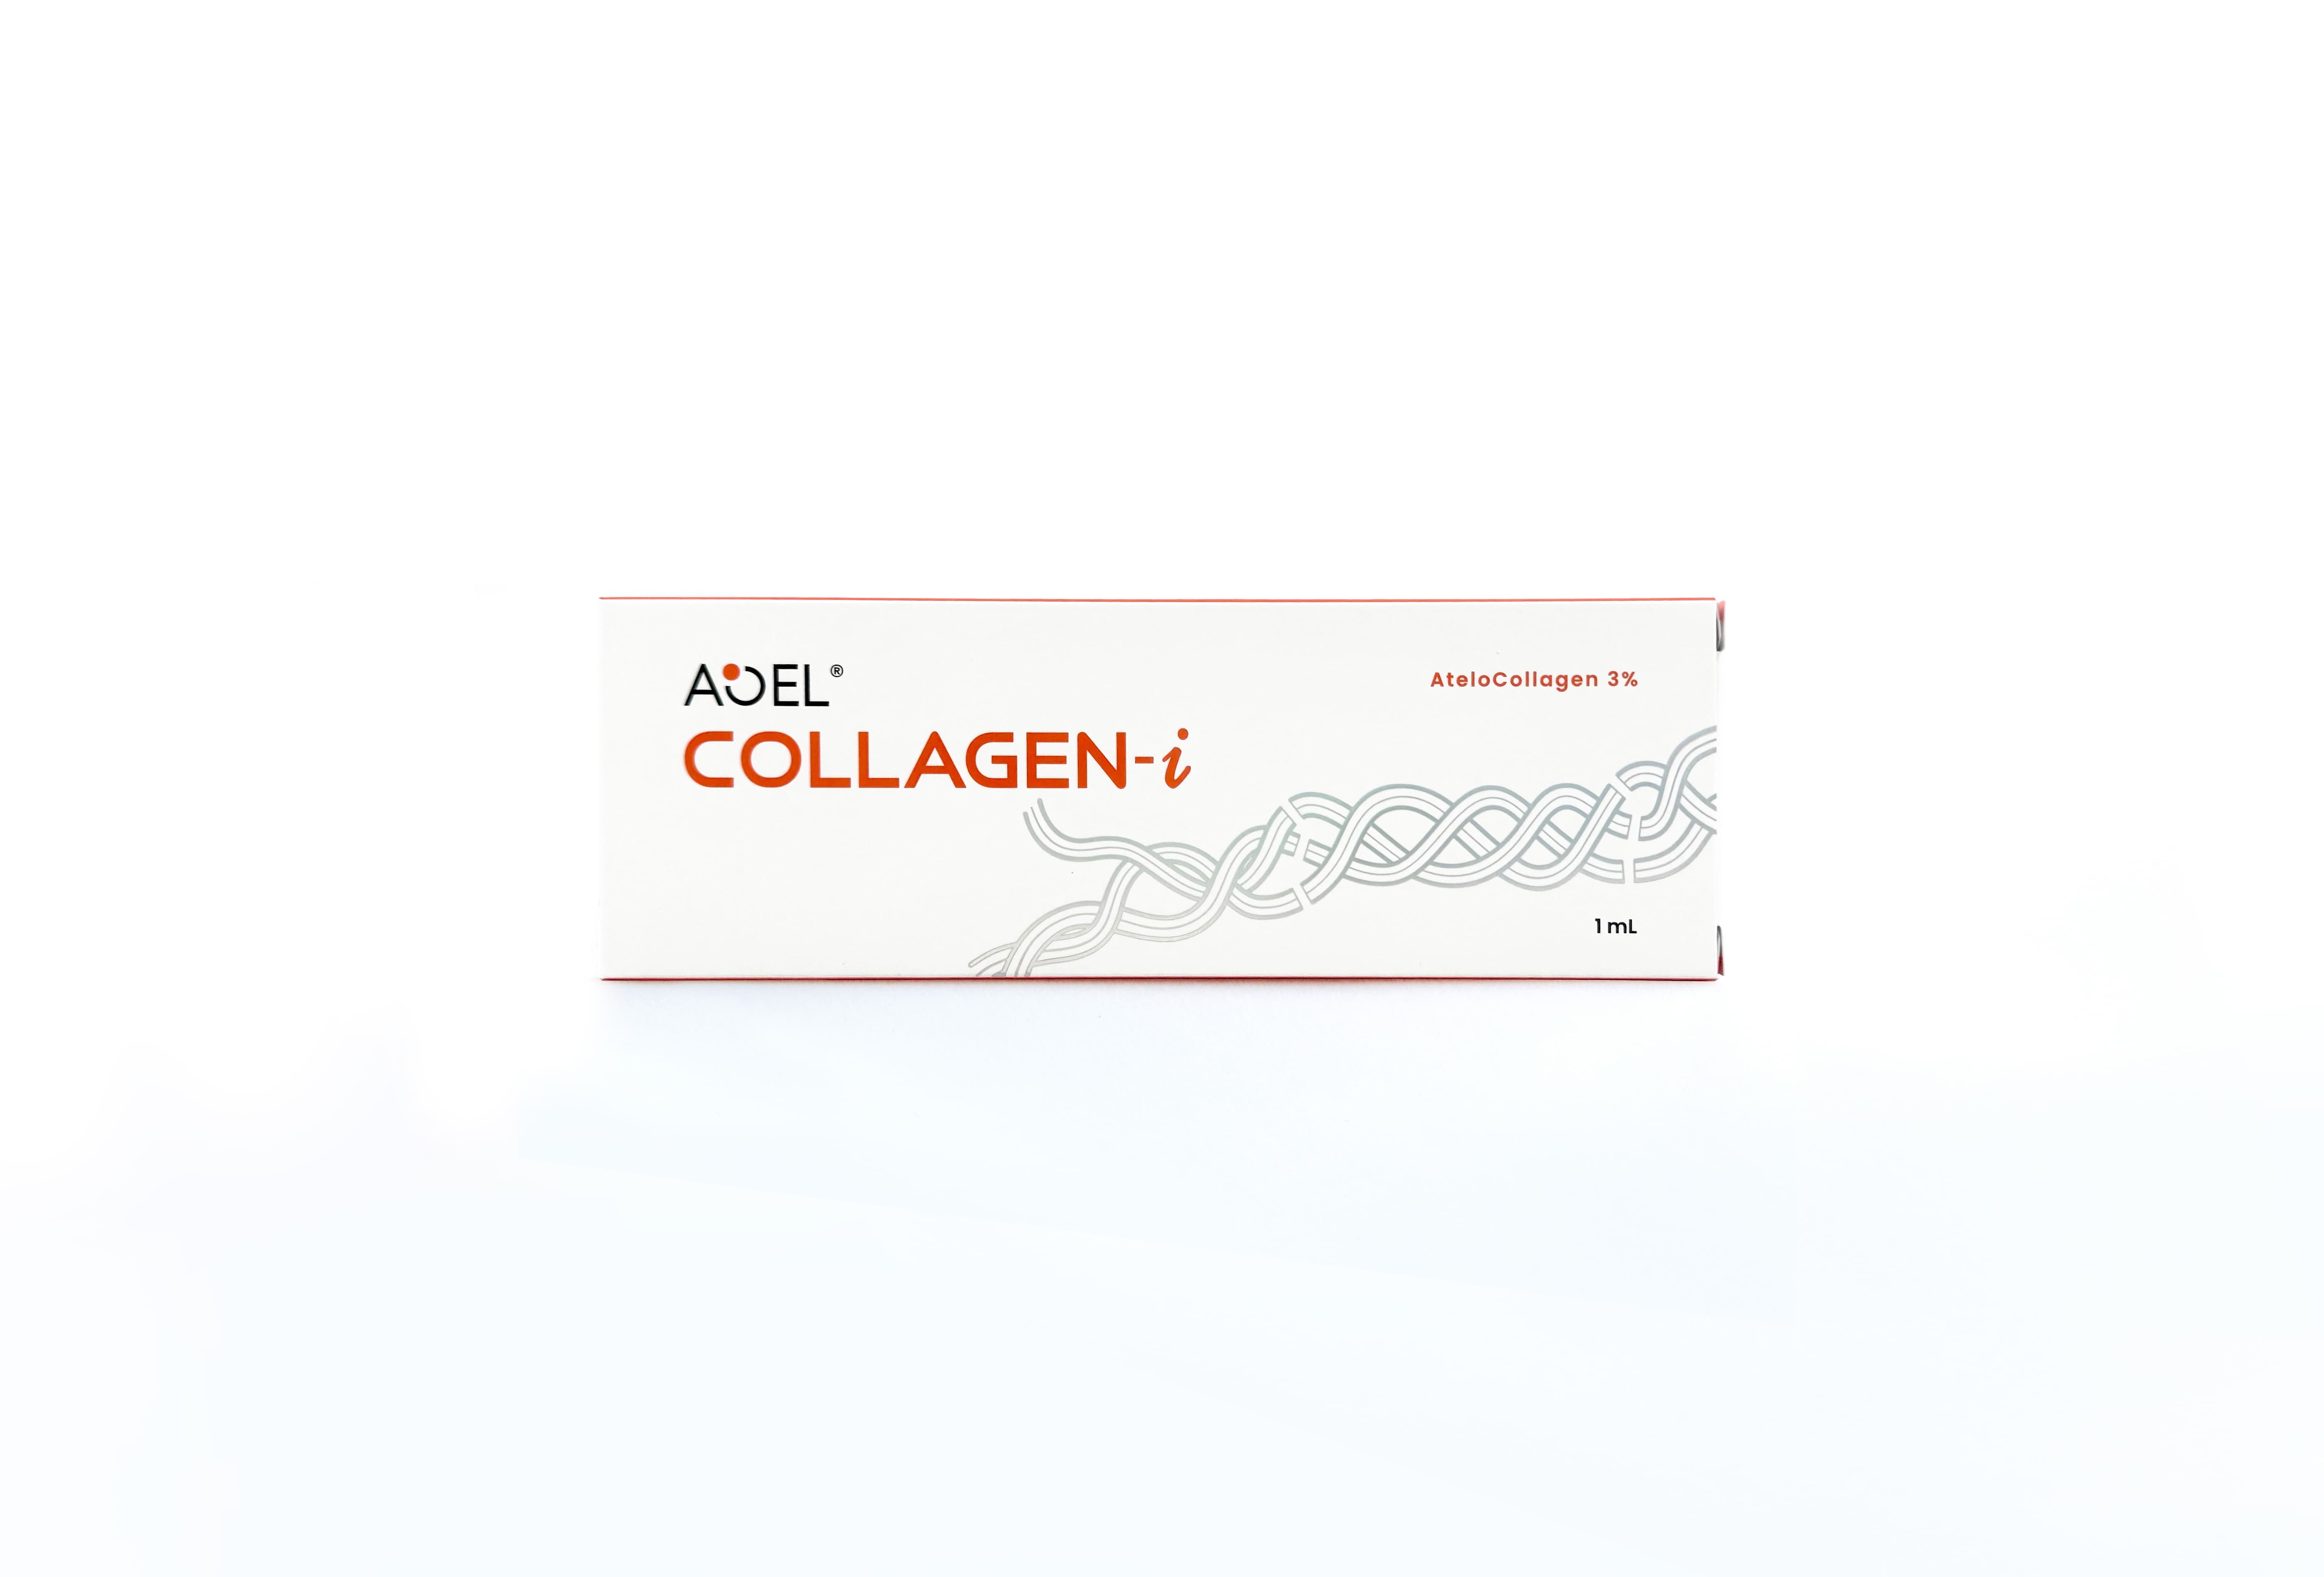 AOEL Collagen i